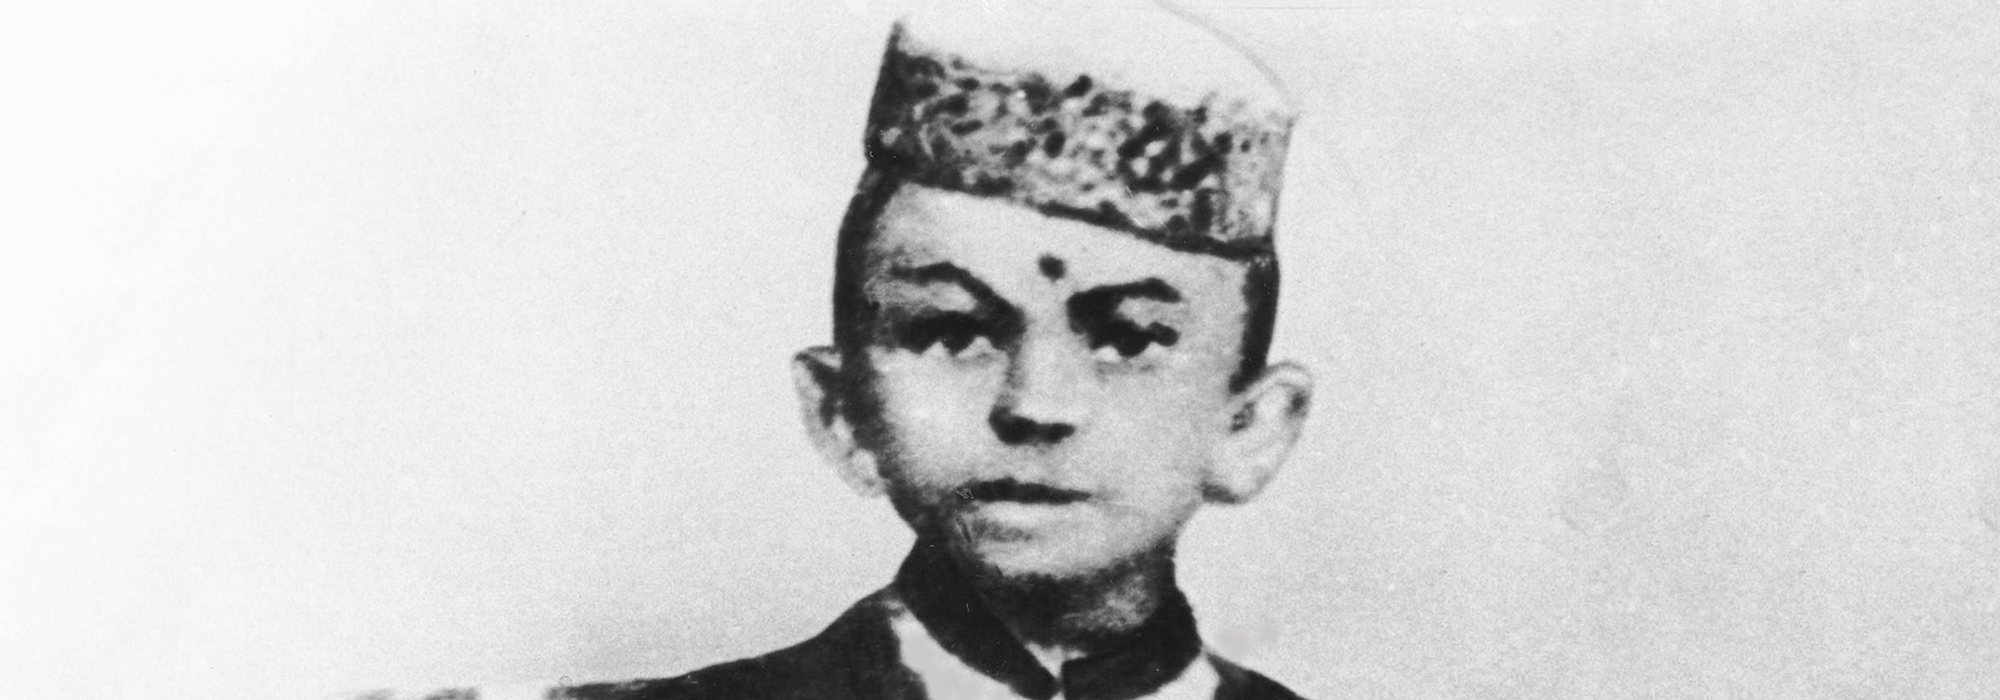 Gandhi at age 7, Rajkot, Gujarat